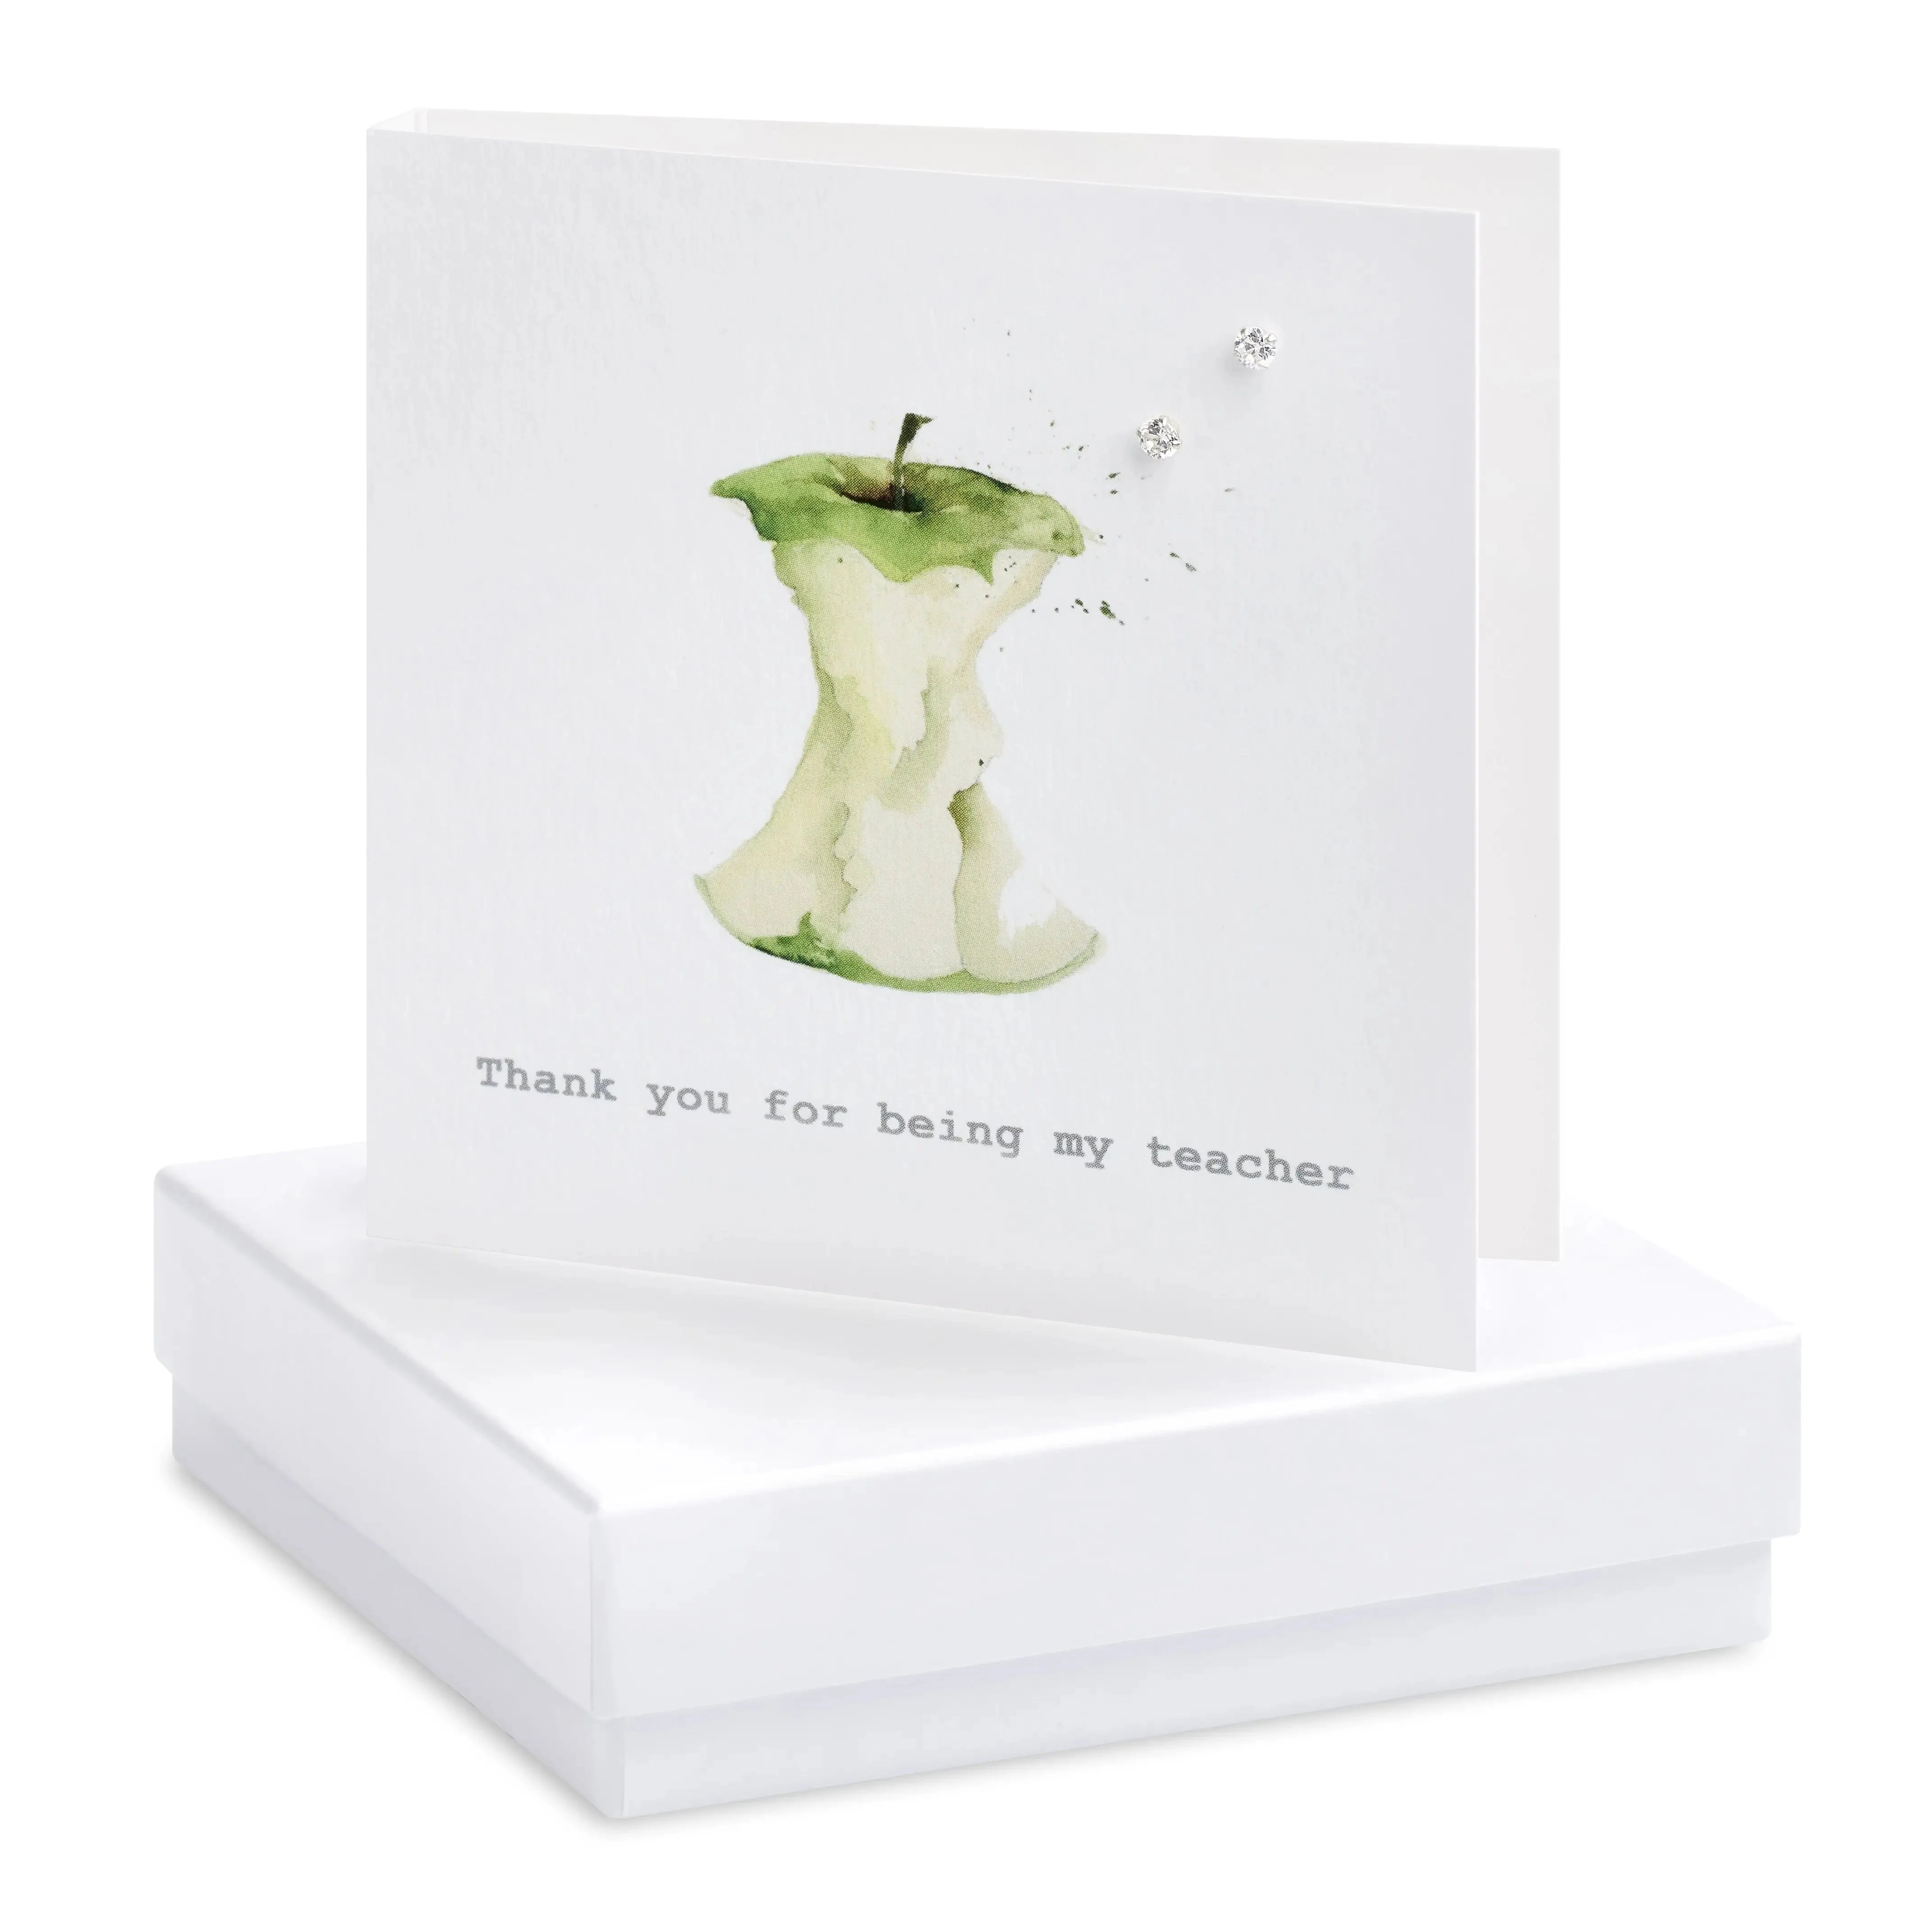 Fabulous Gifts Crumble & Core Box Teacher Apple Earring Card by Weirs of Baggot Street